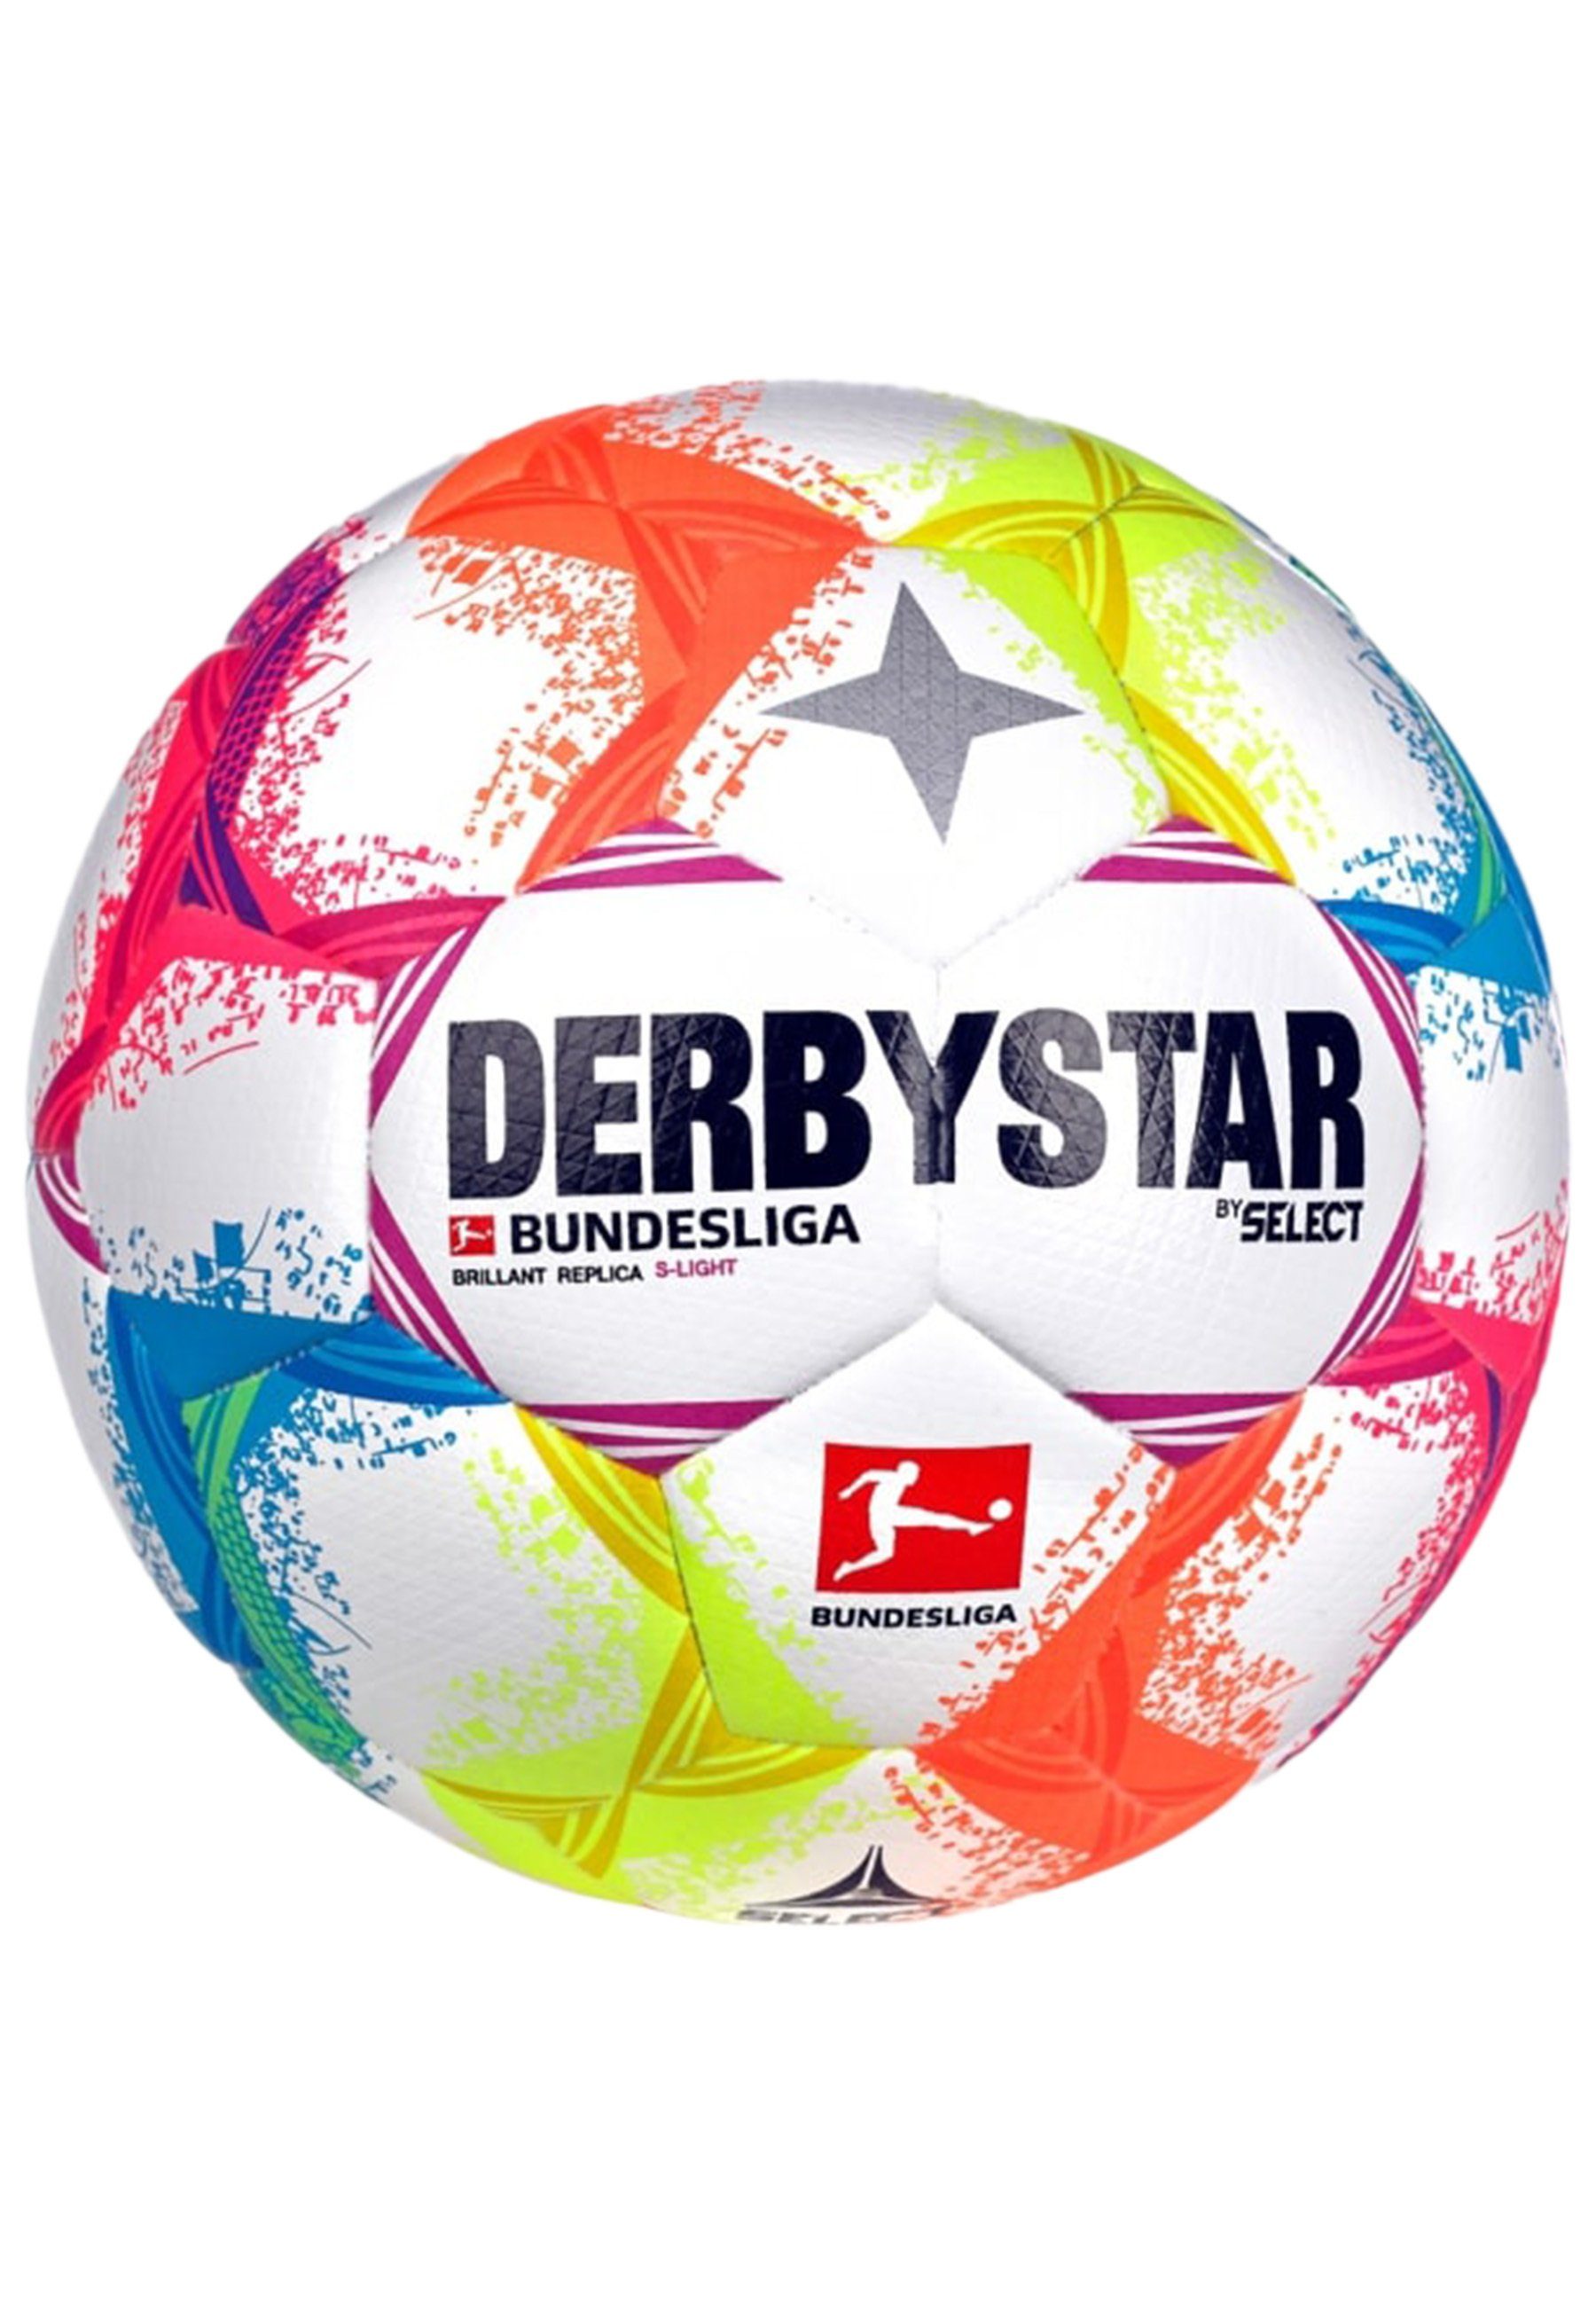 Derbystar Fußball Bundesliga Brillant Replica